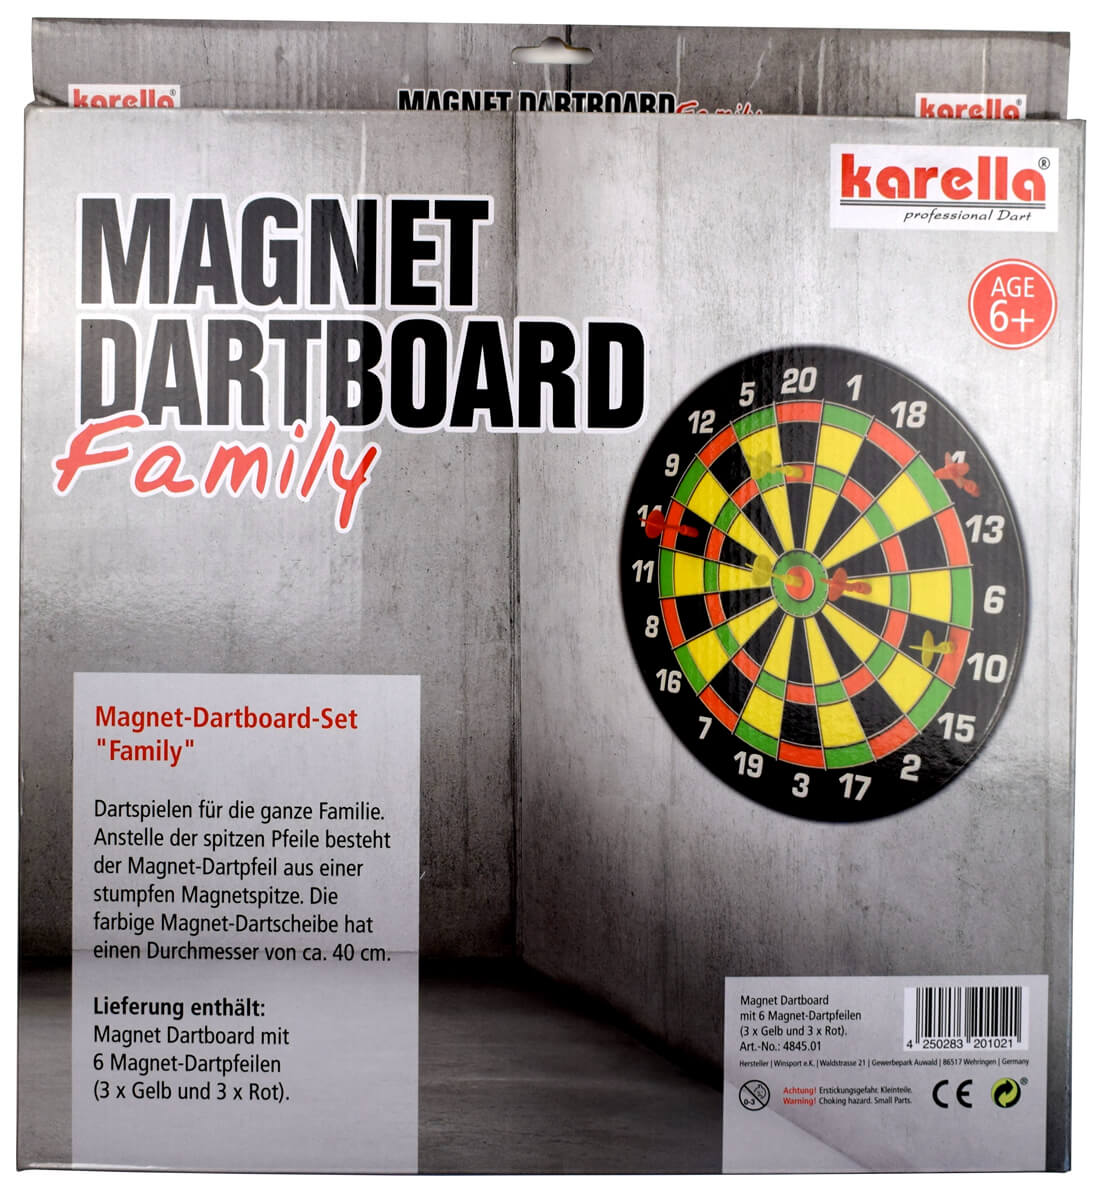 Magnet-Dartboard-Set Karella Family